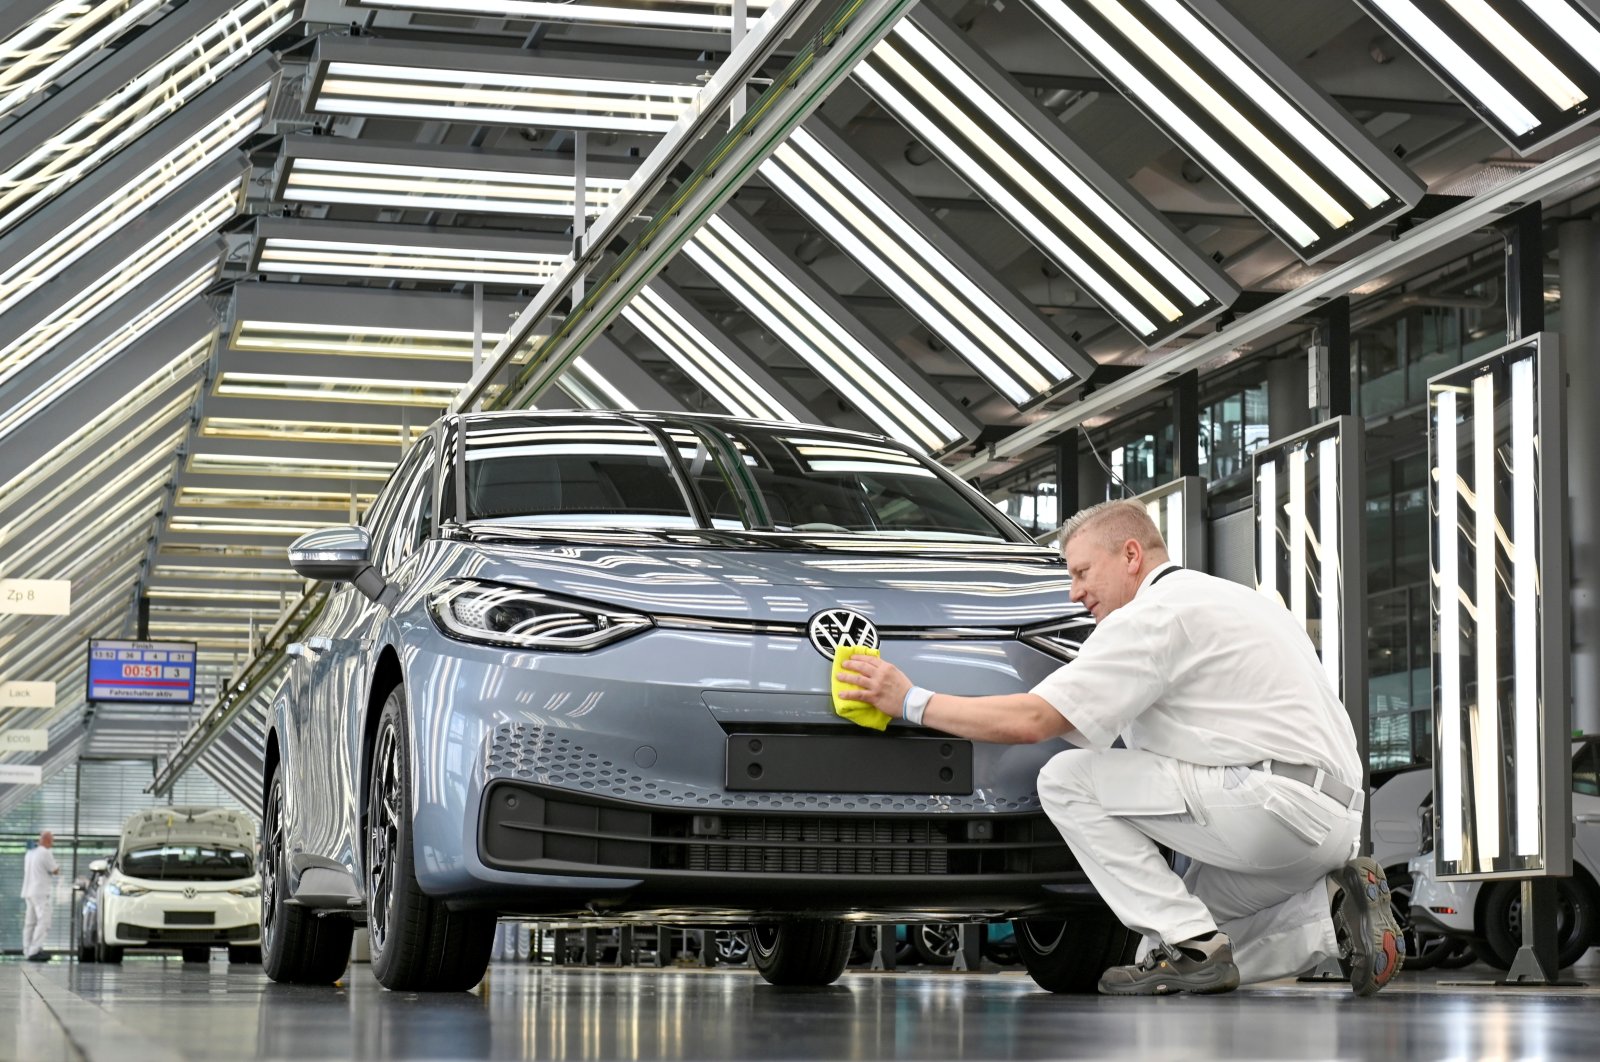 Technicians work in the final inspection line of German carmaker Volkswagen's electric car in Dresden, Germany, June 8, 2021. (Reuters Photo)